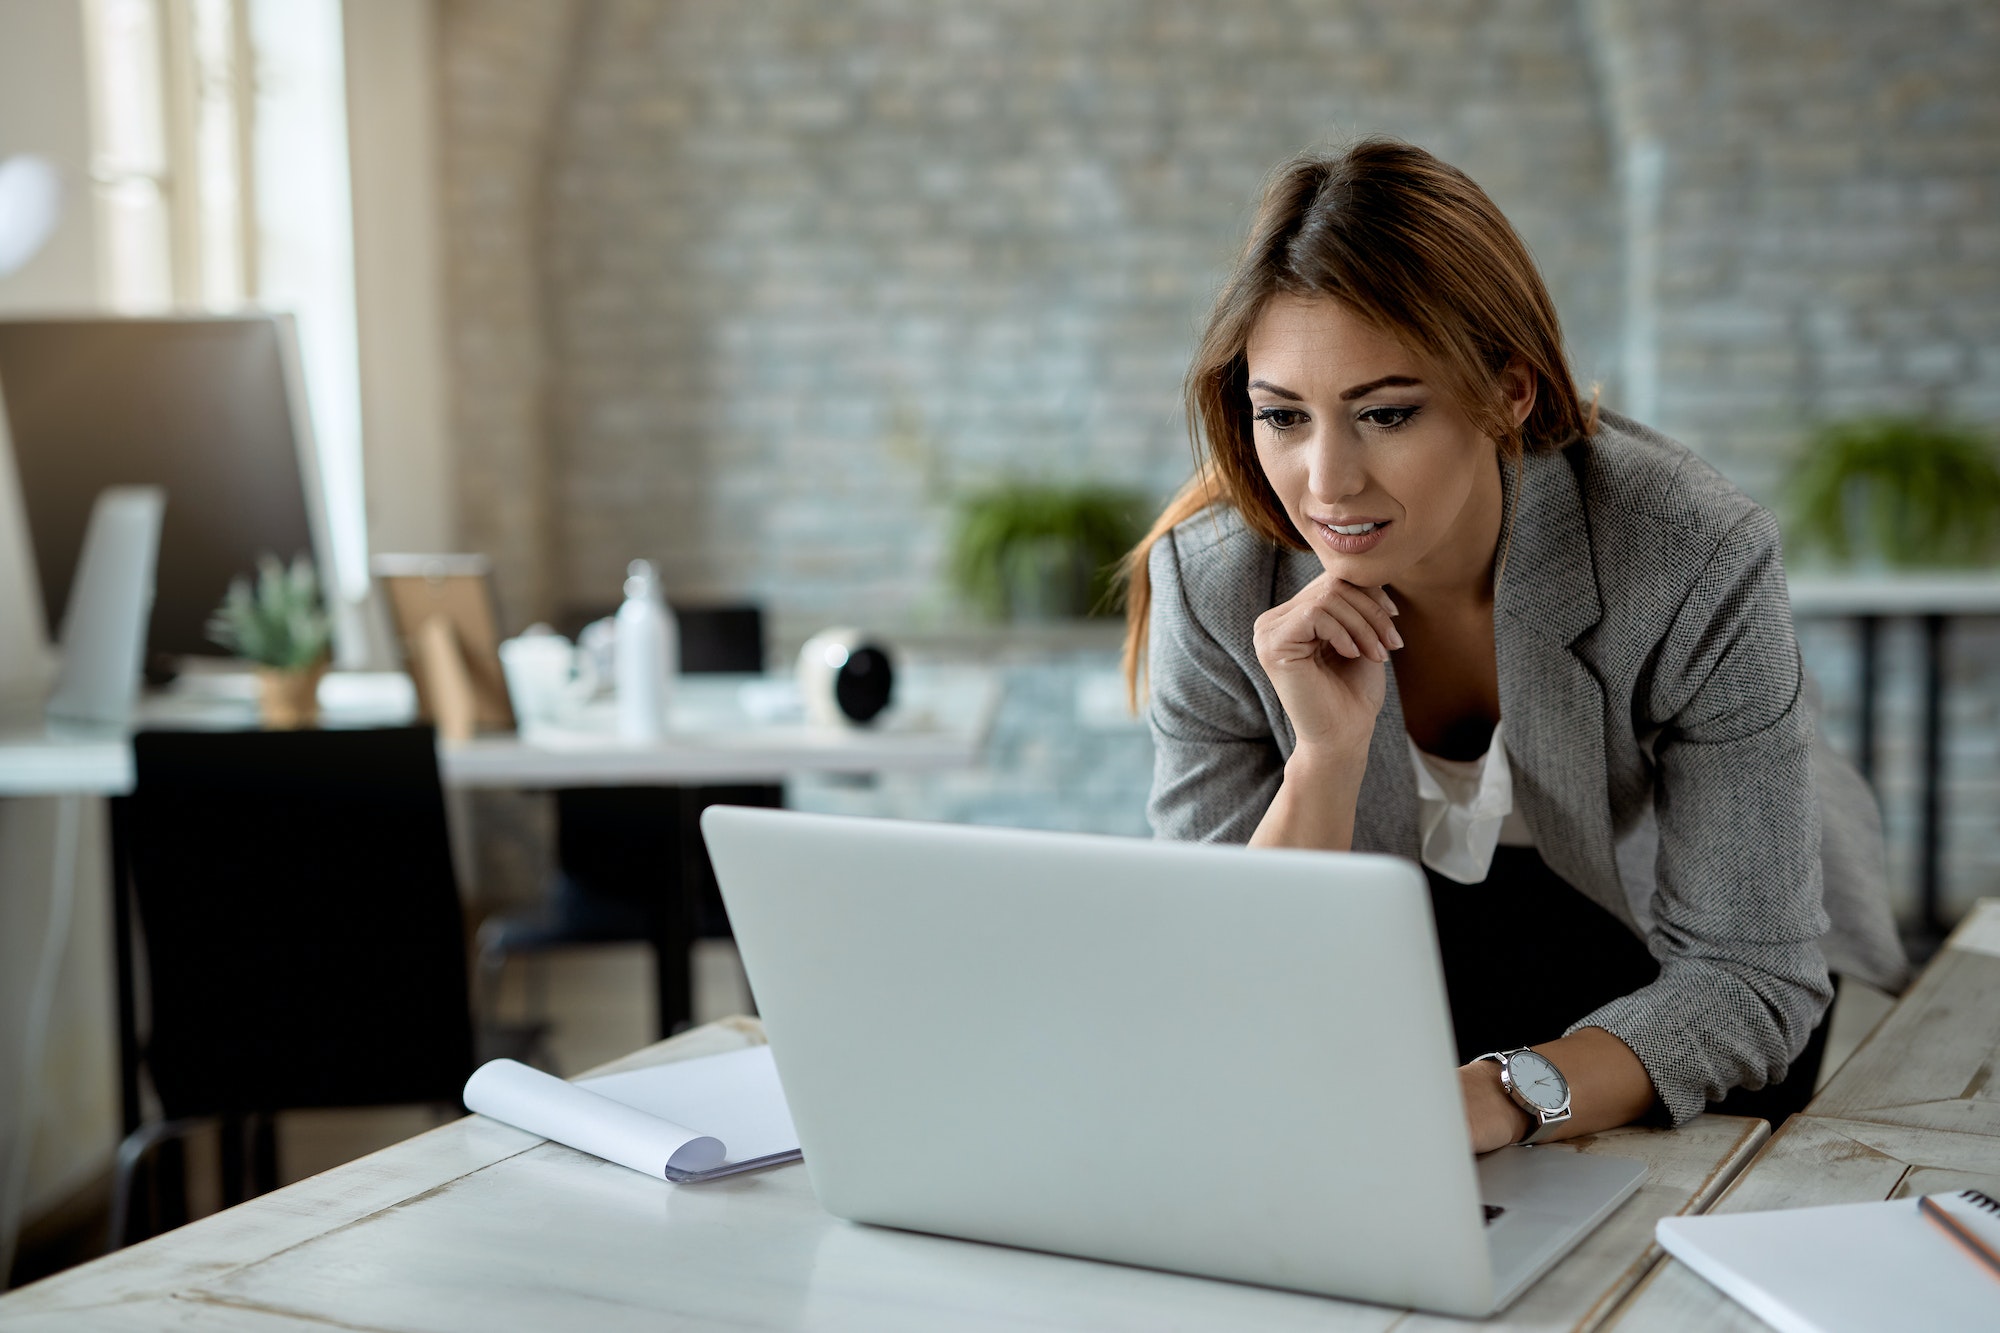 Female entrepreneur reading an e-mail on laptop in the office.